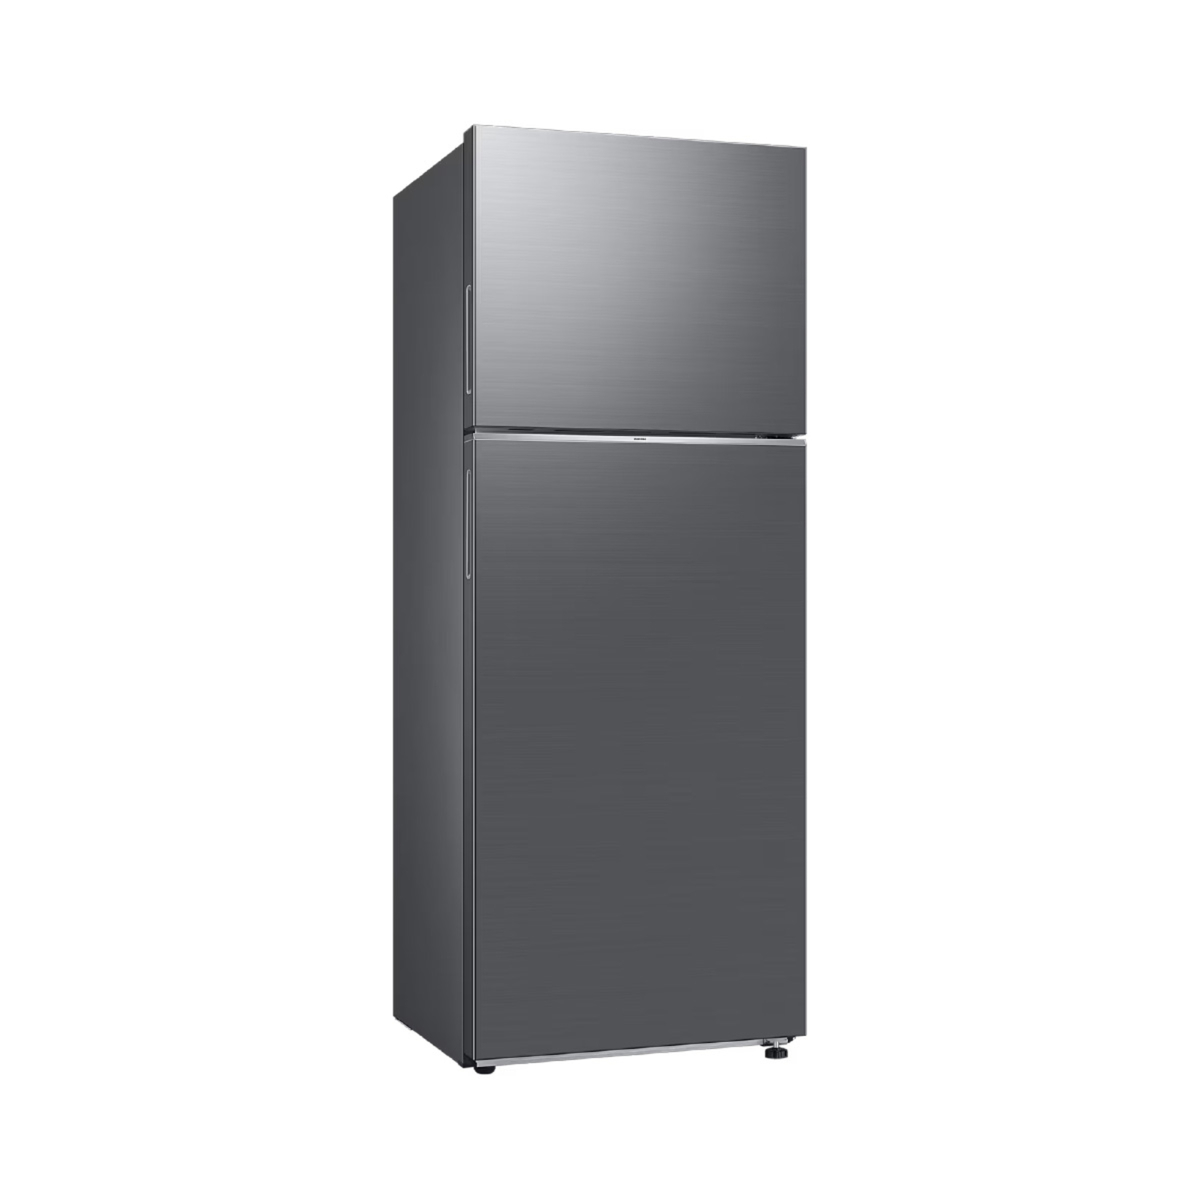 Samsung Top Mount Freezer Refrigerator with Optimal Fresh+, 500 L, RT50CG6400S9